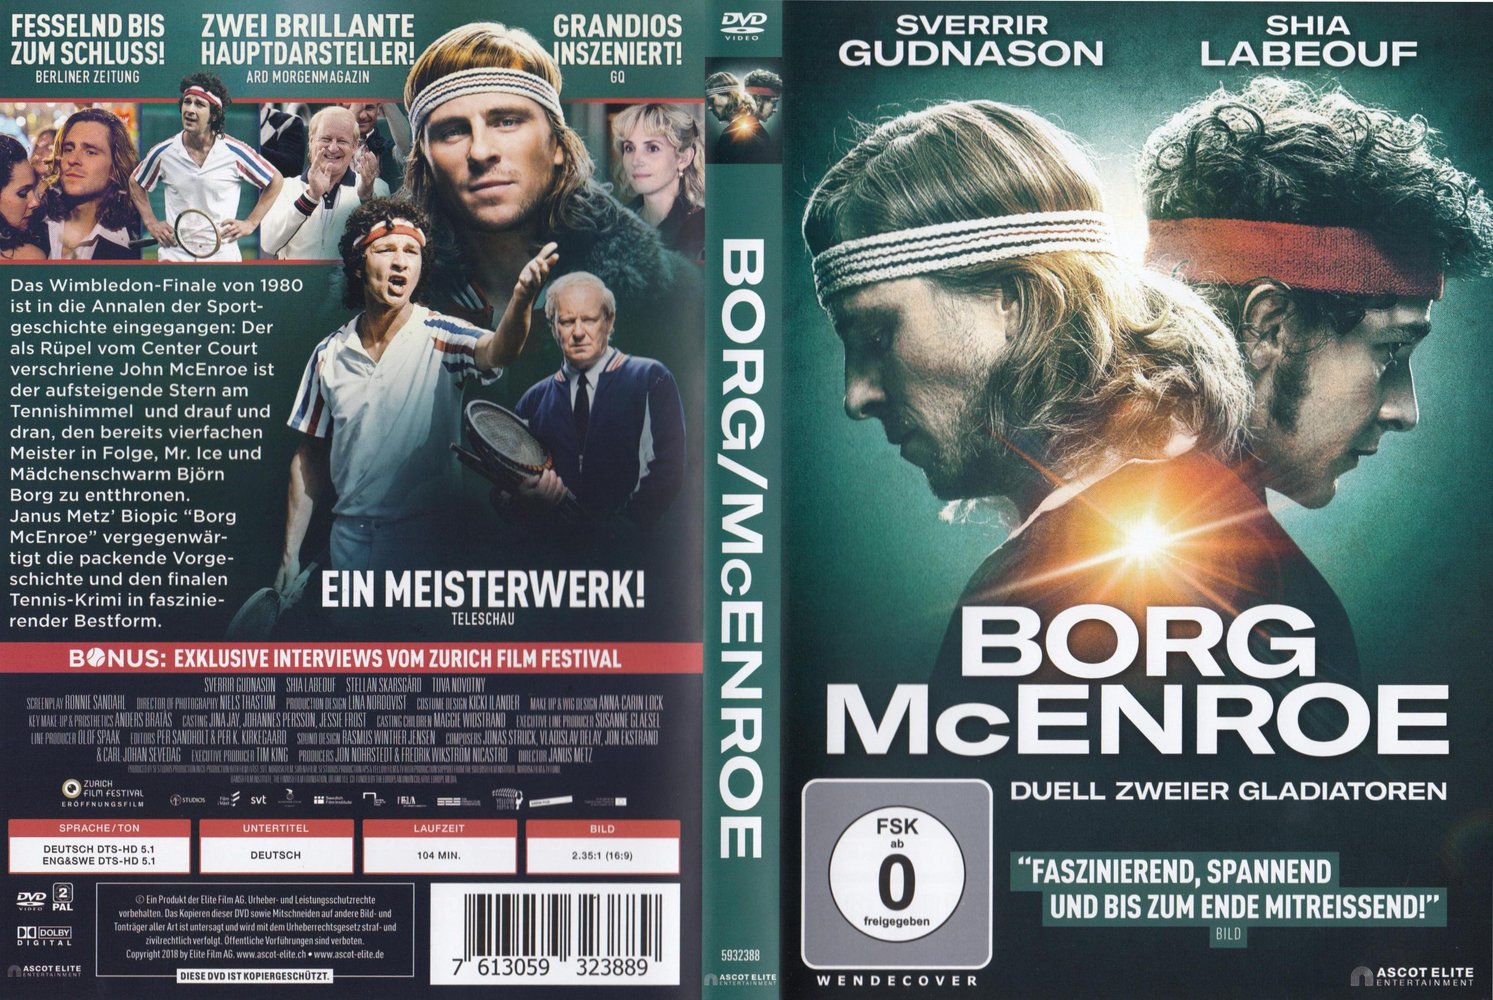 Borg/McEnroe DVD, Blu-ray oder VoD leihen